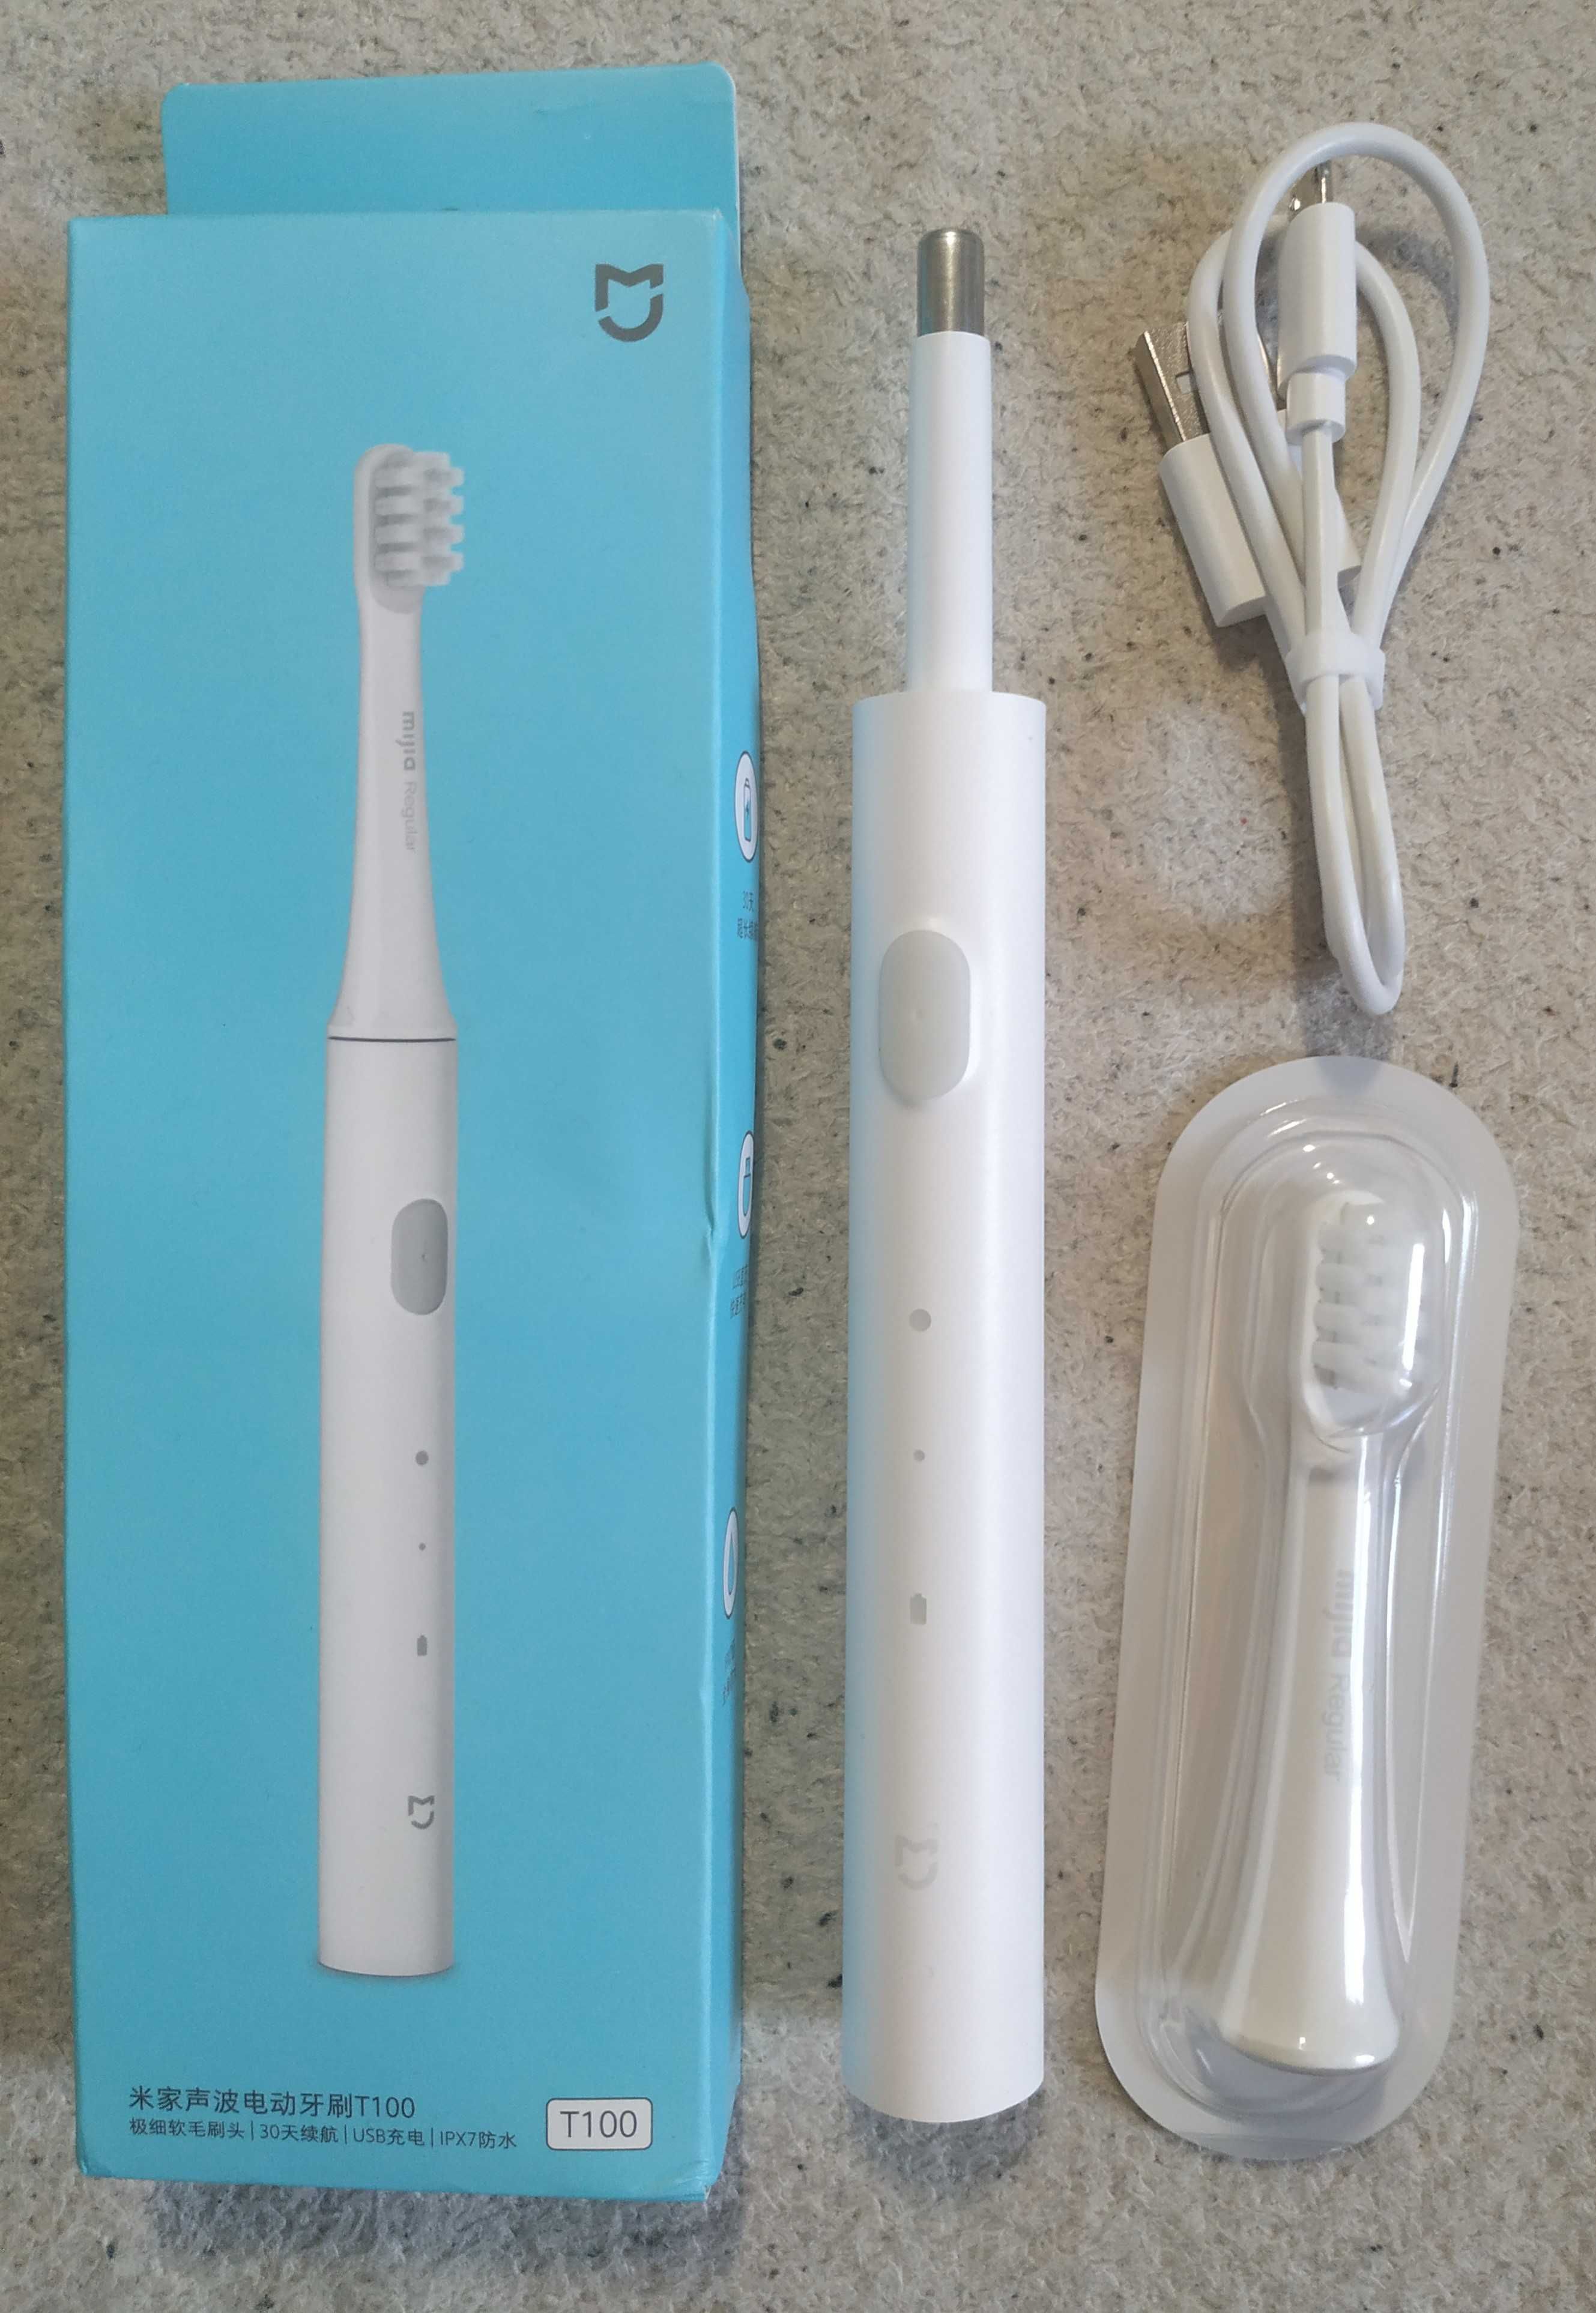 Аккумуляторная зубная щетка Xiaomi Mijia Sonic T100